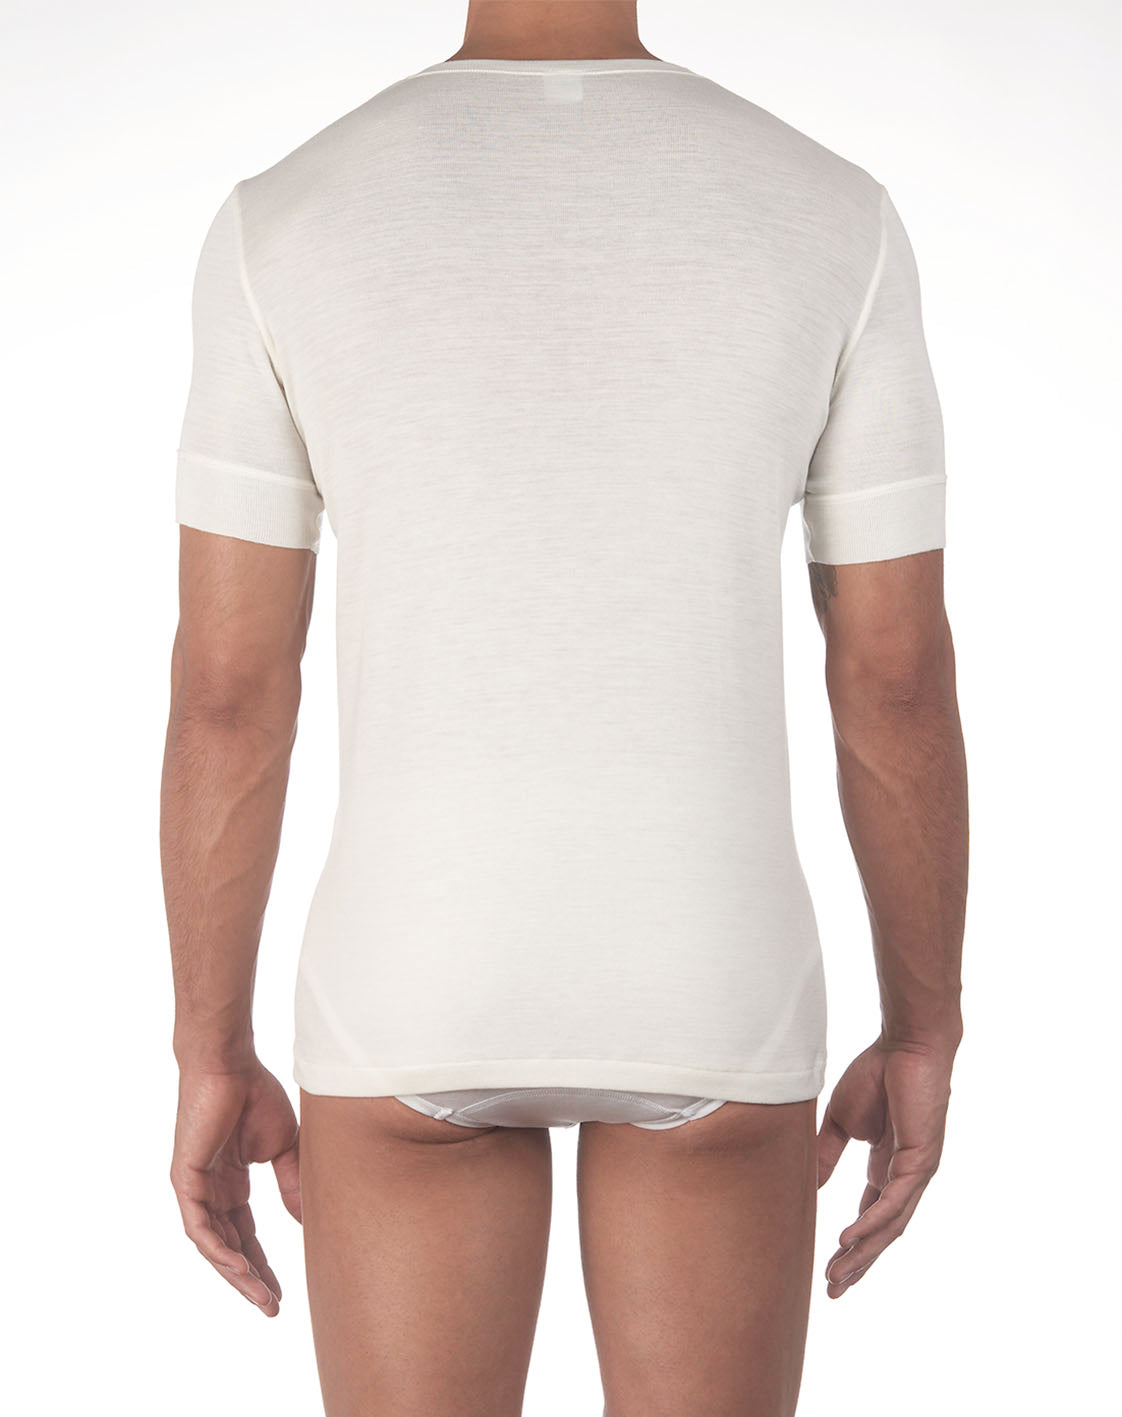 Underwear - Top Man100% Merino Wool 221 - Oscalito